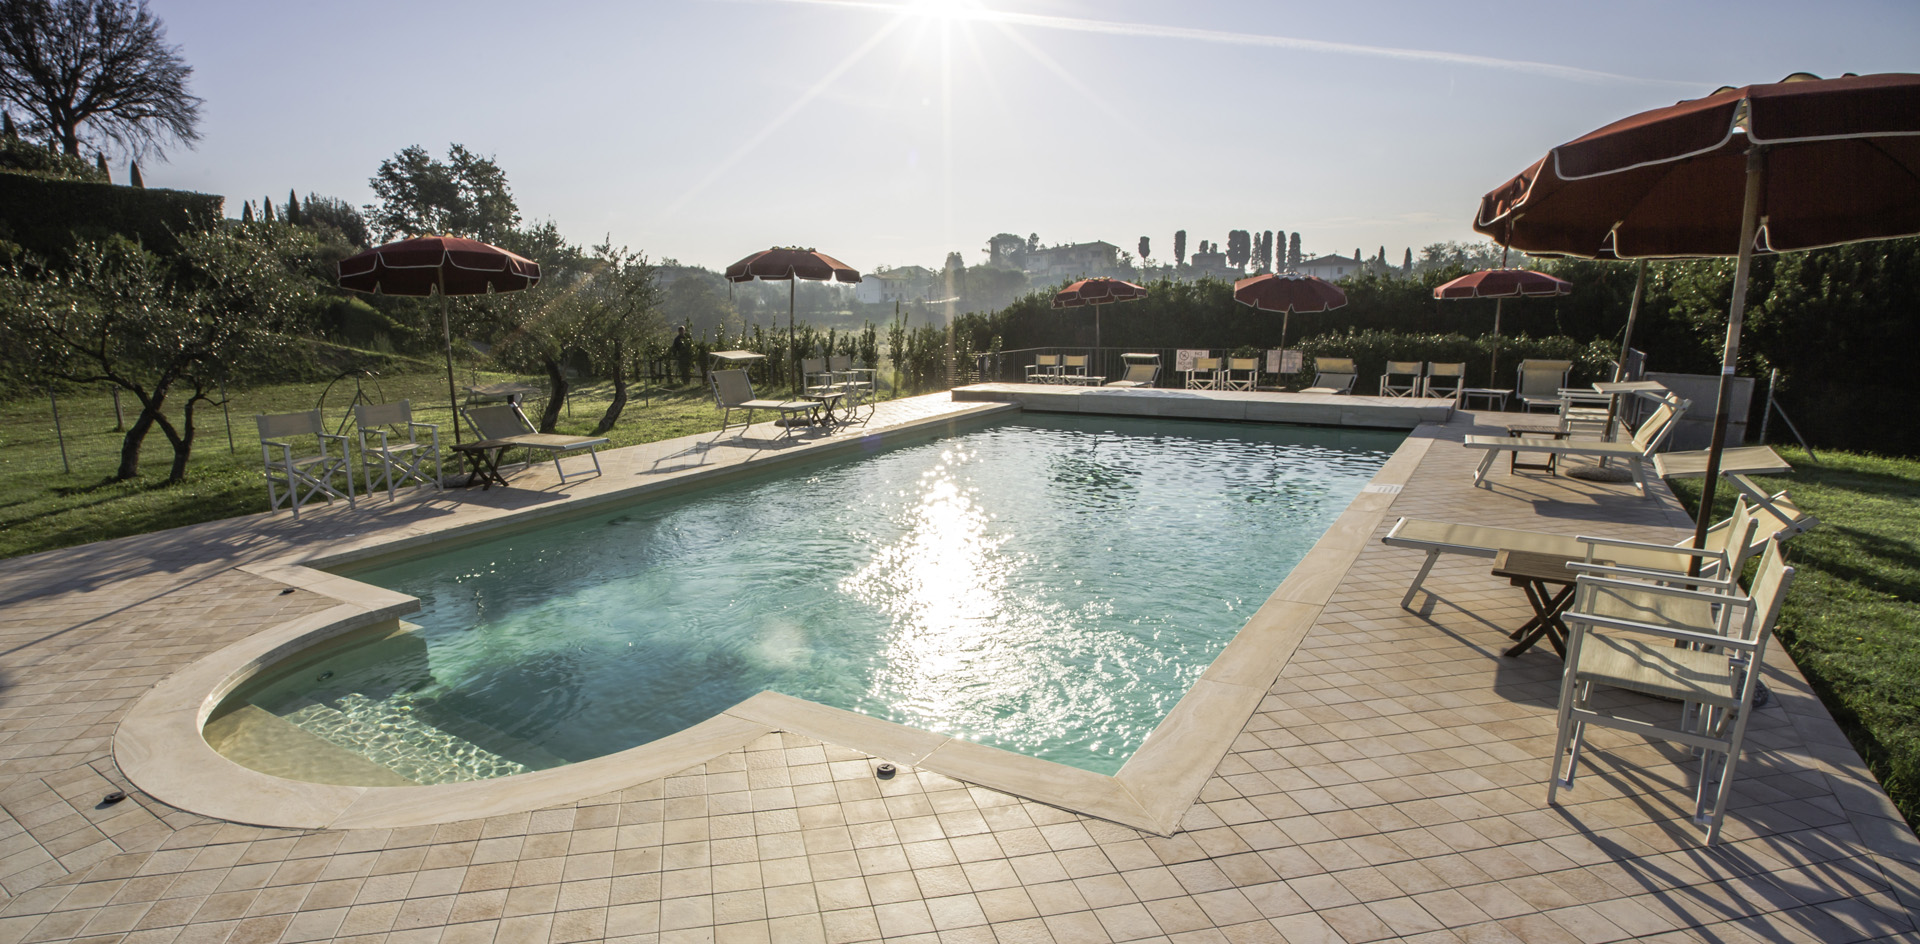 Toskanisches Urlaubsfeeling am Pool unter Olivenbäumen